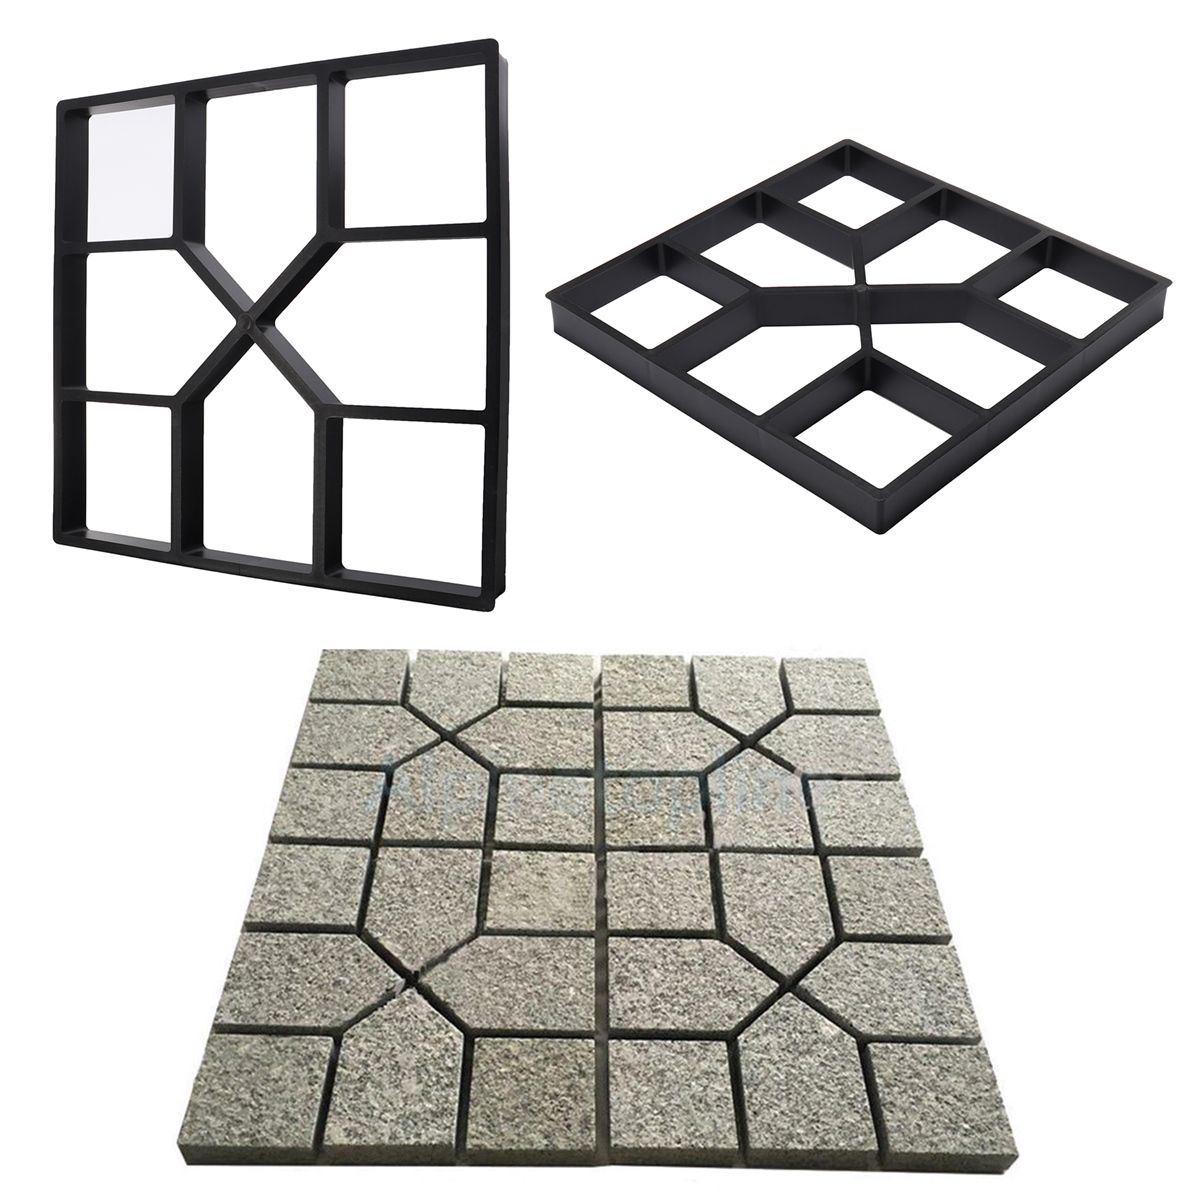 DIY-Pavement-Paving-Molds-Concrete-Stepping-Driveway-Stone-Path-Mold-Maker-Cement-Bricks-Mould-1576652